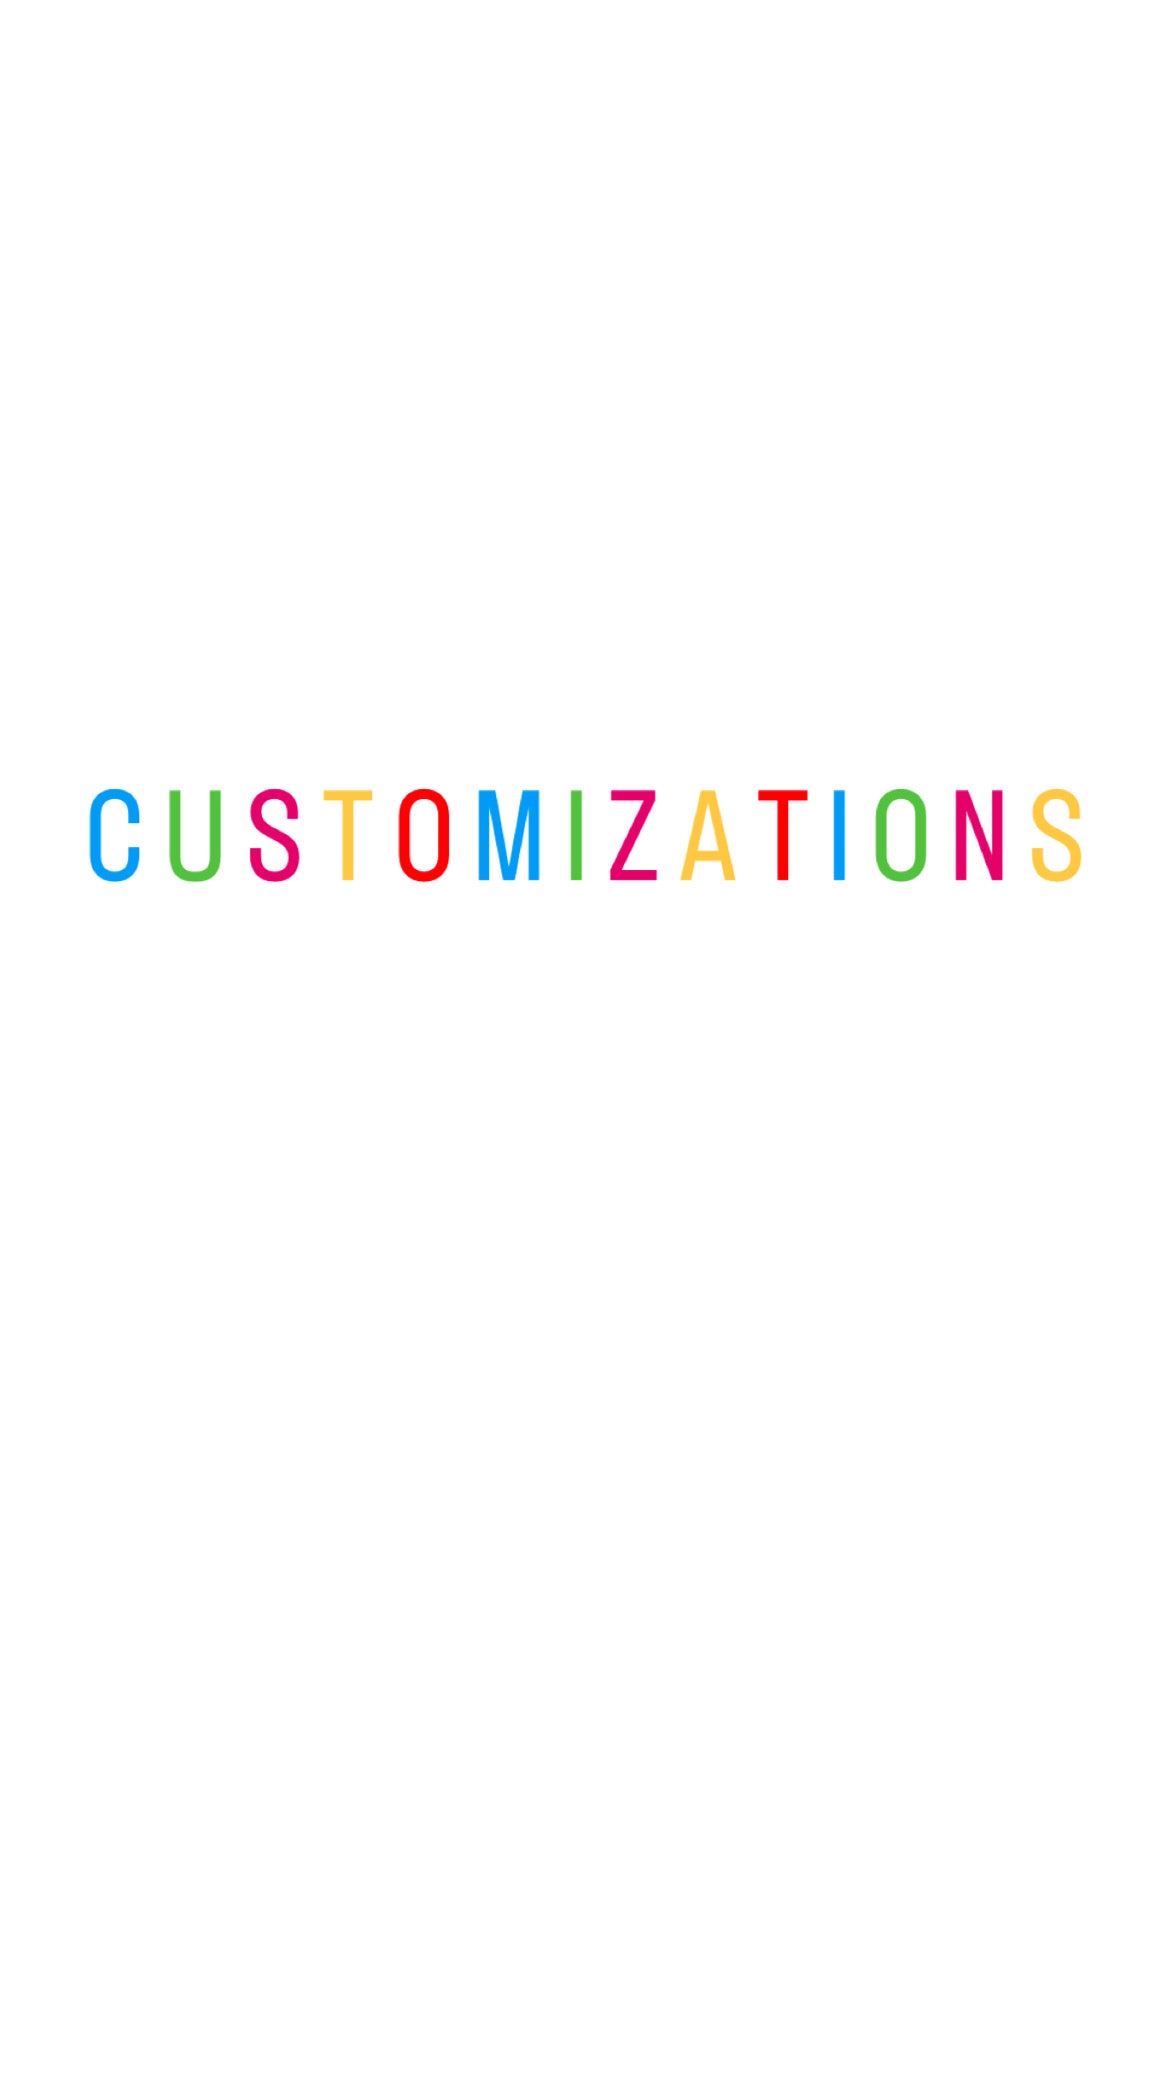 Customizations: Colors, Fonts, Monograms